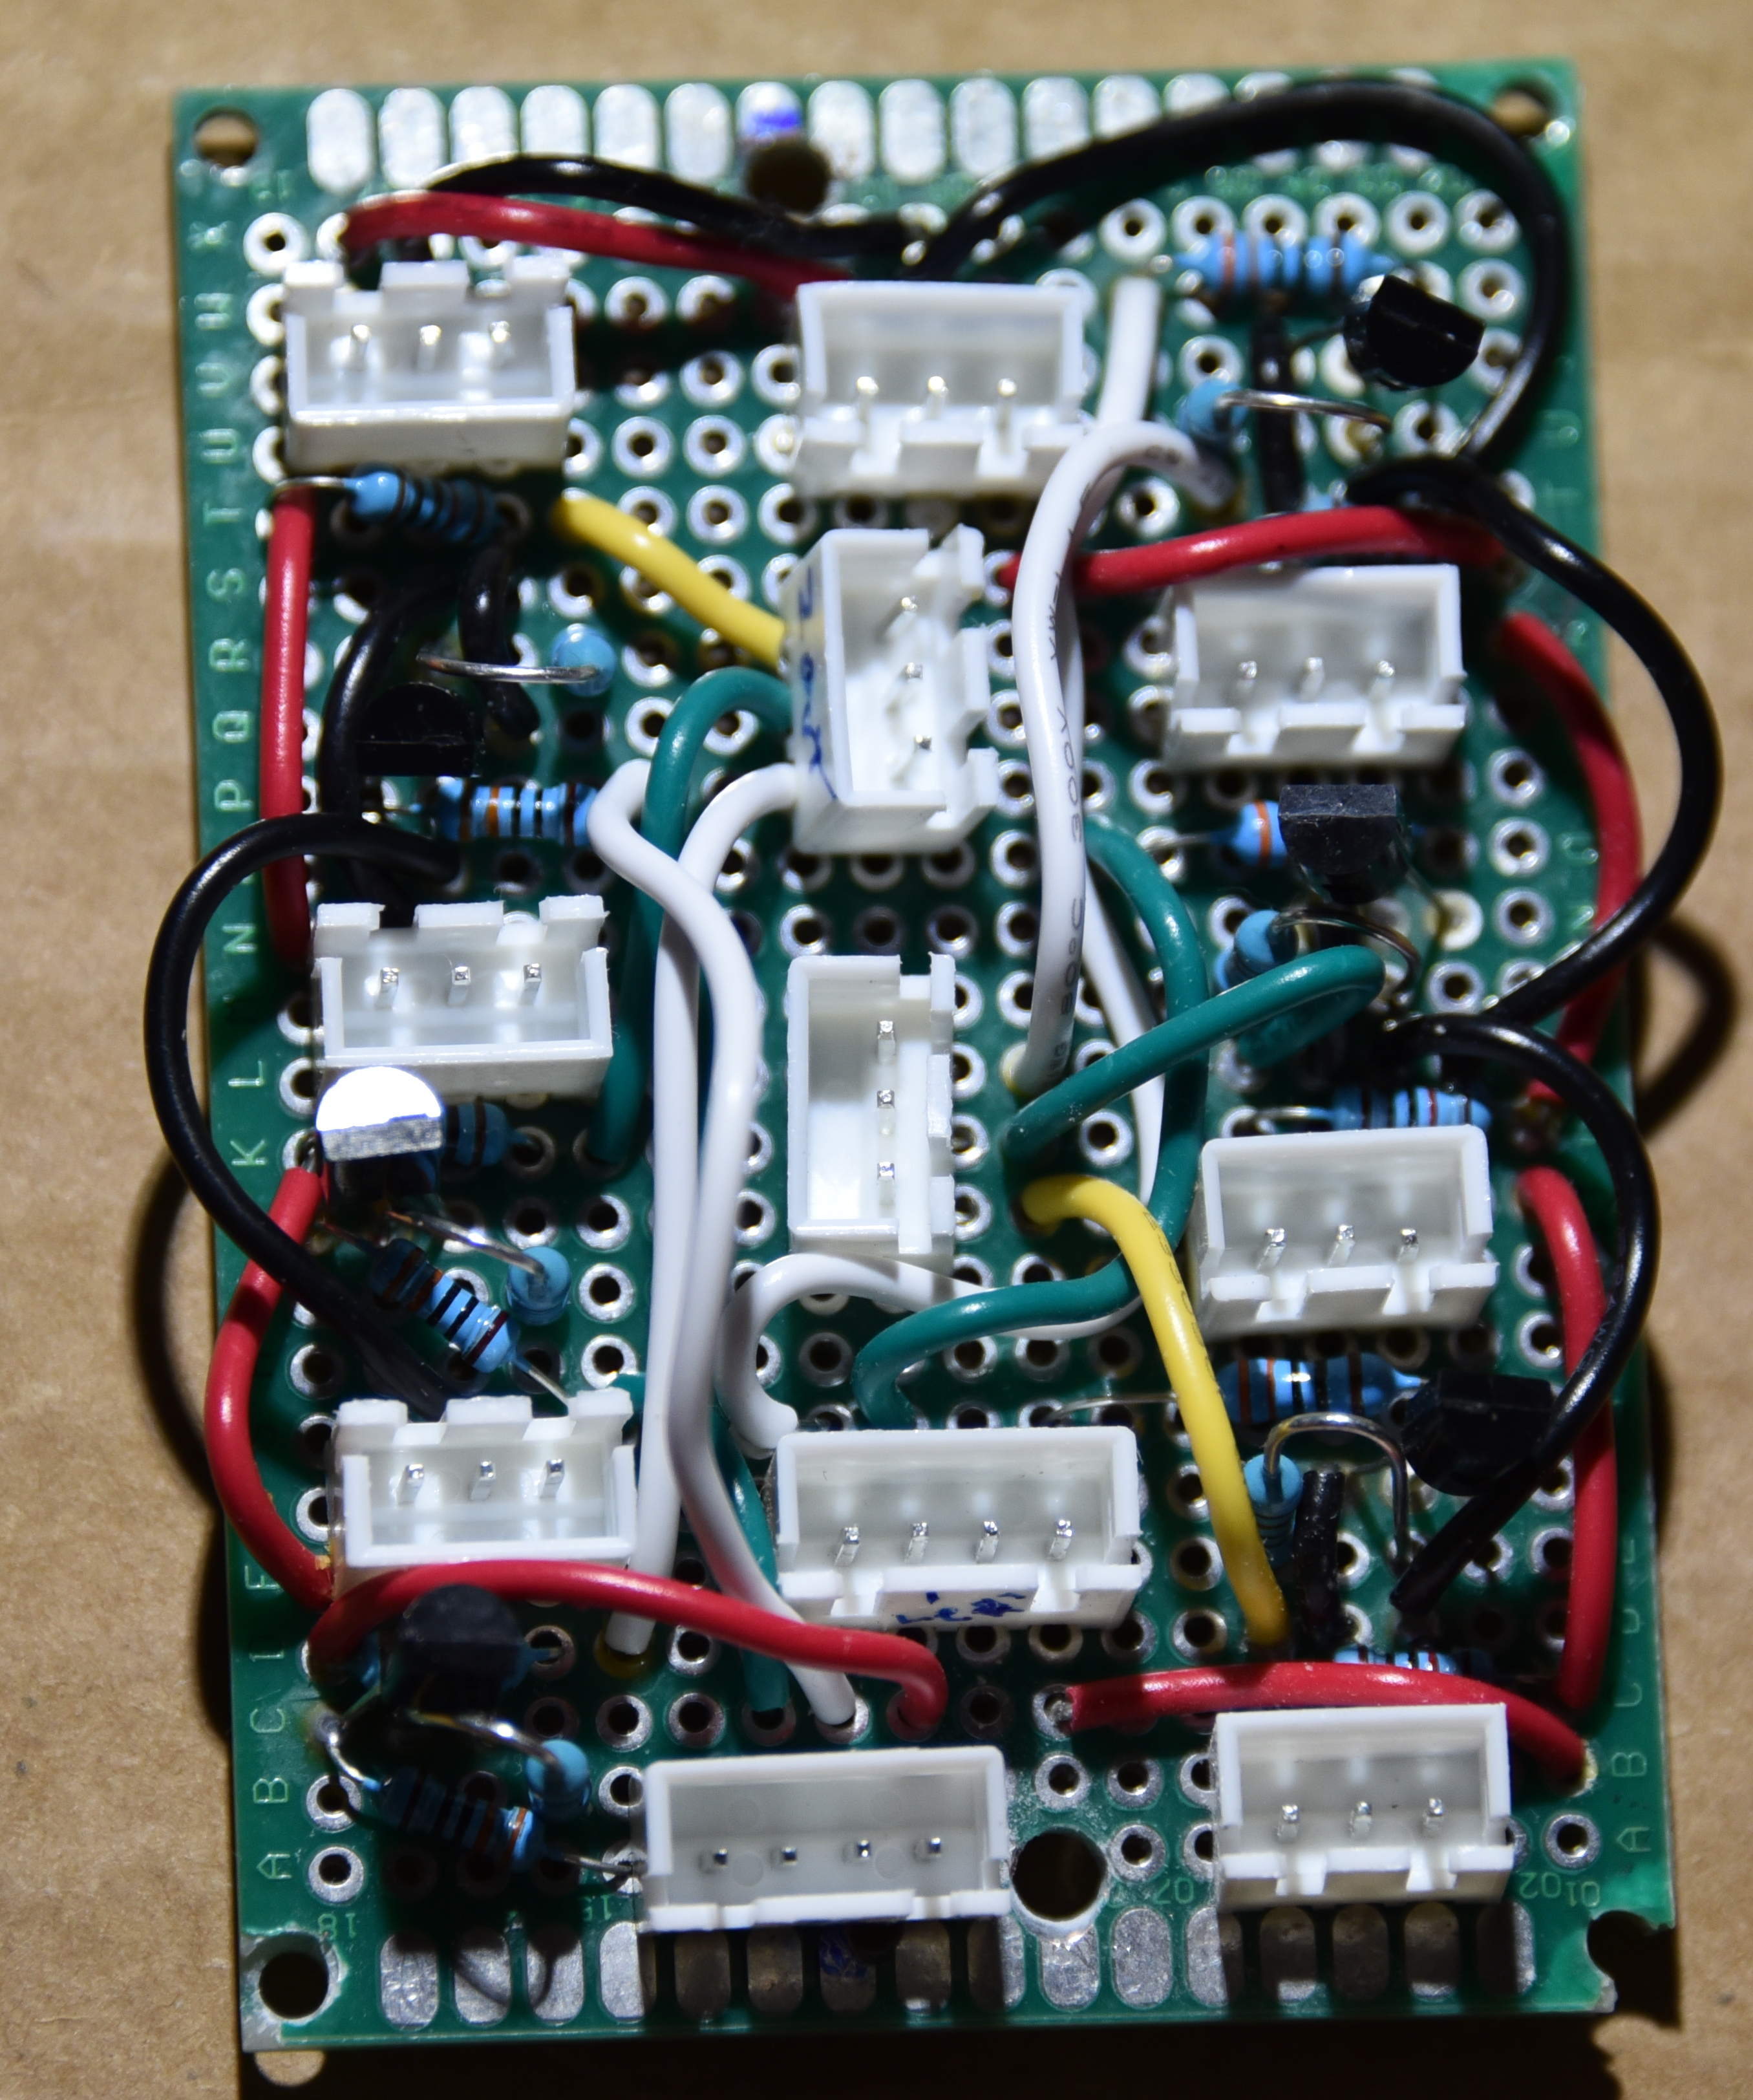 Sensor and LED Interconnect Board